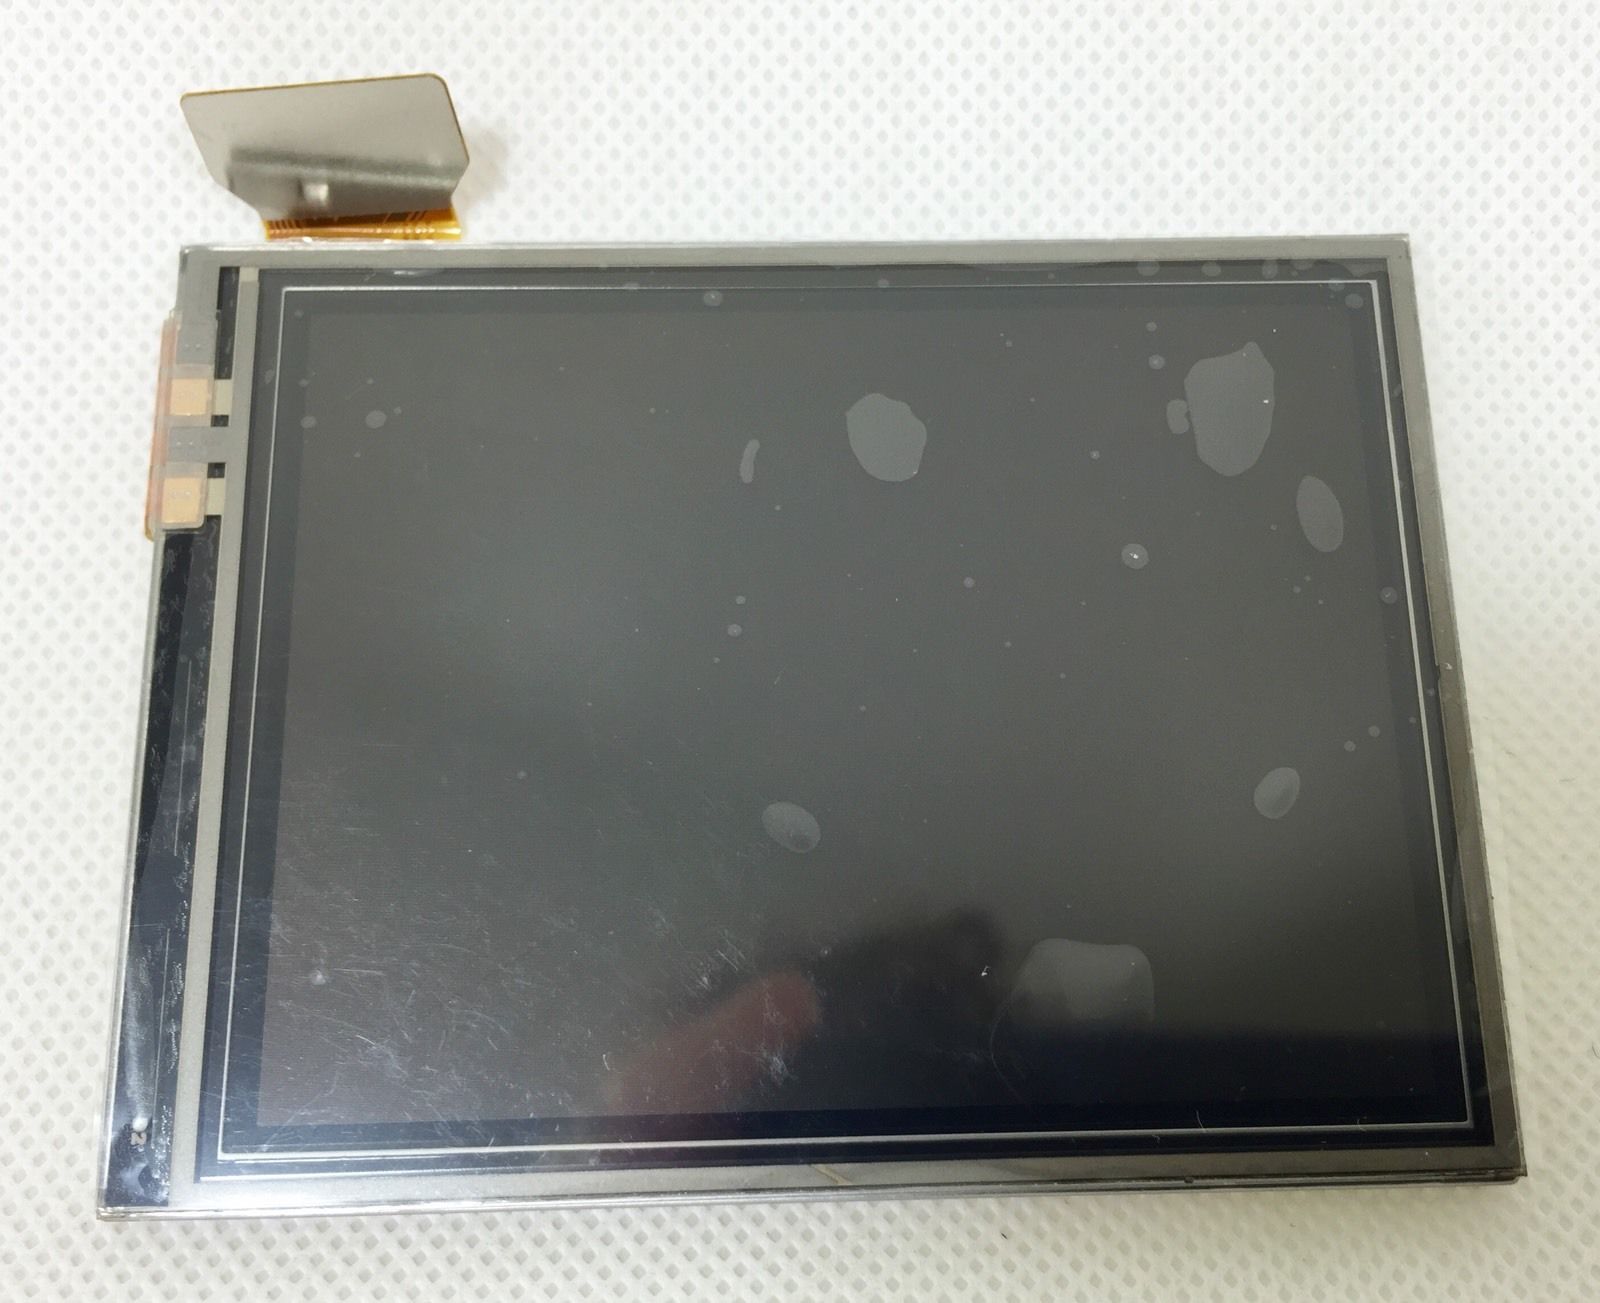 Replacement LCD Touchscreen for Leica Viva CS15 Data Collector 